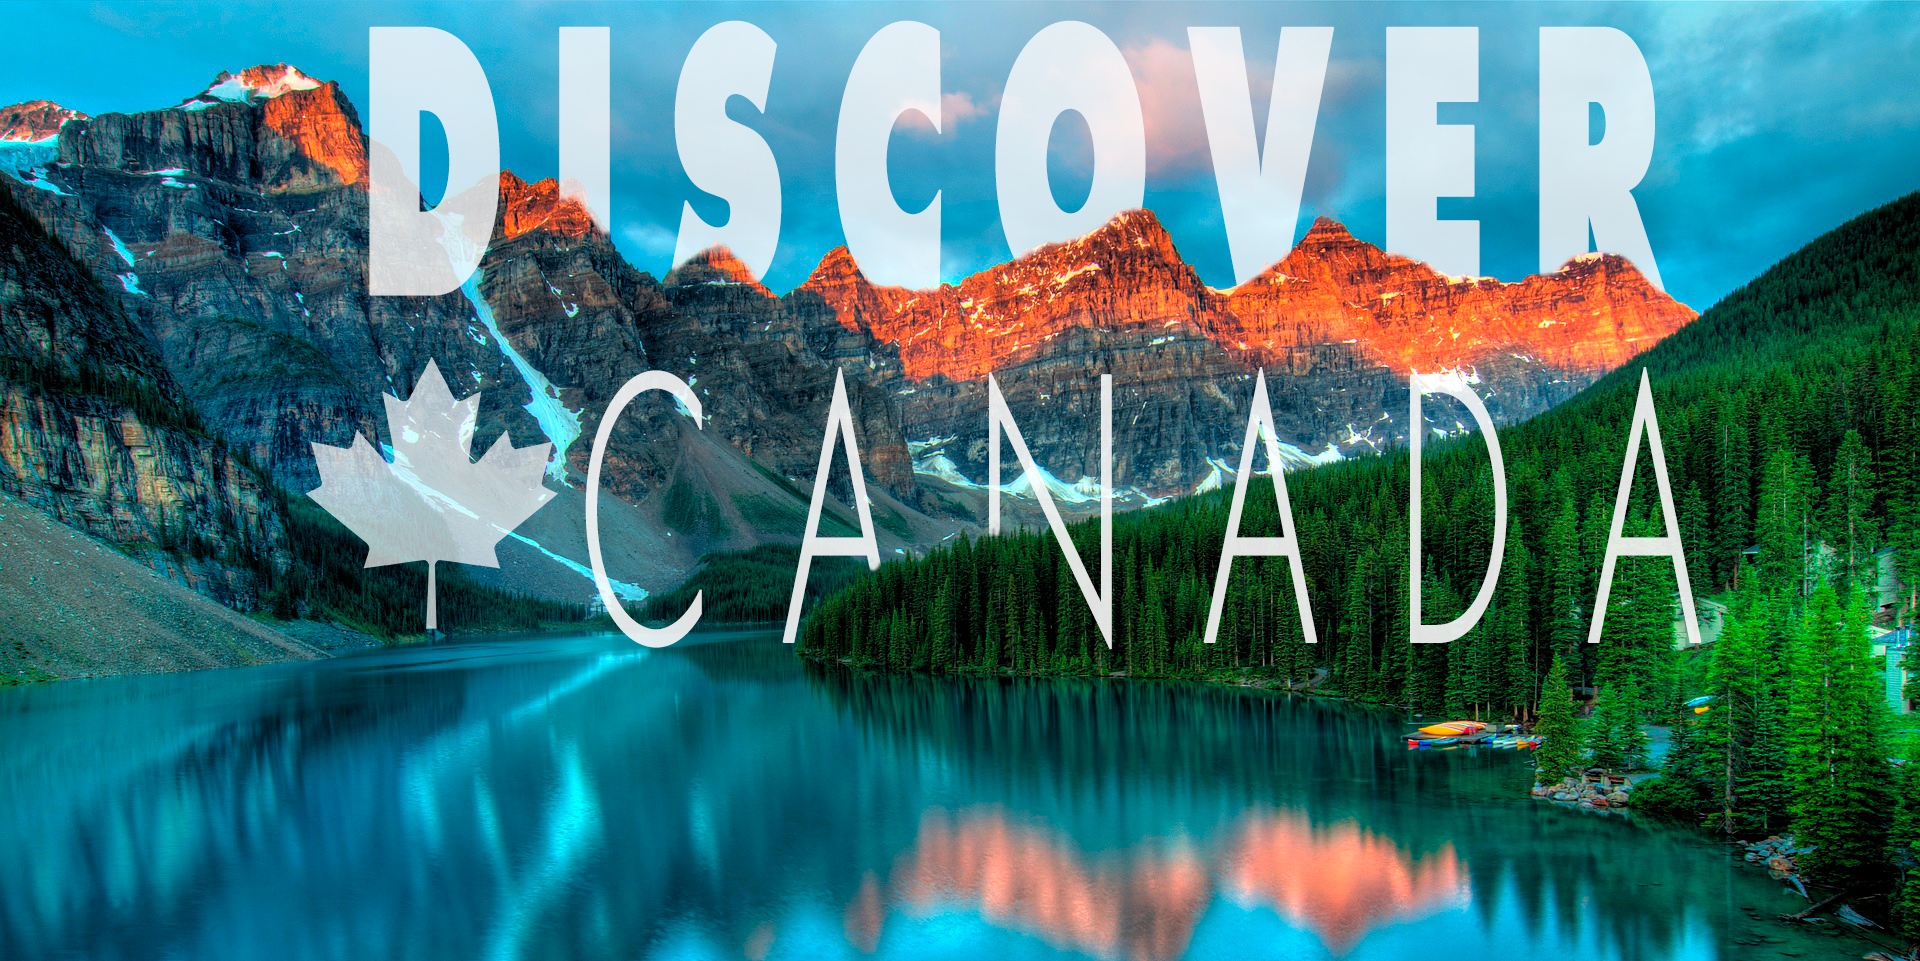 Discover Canada